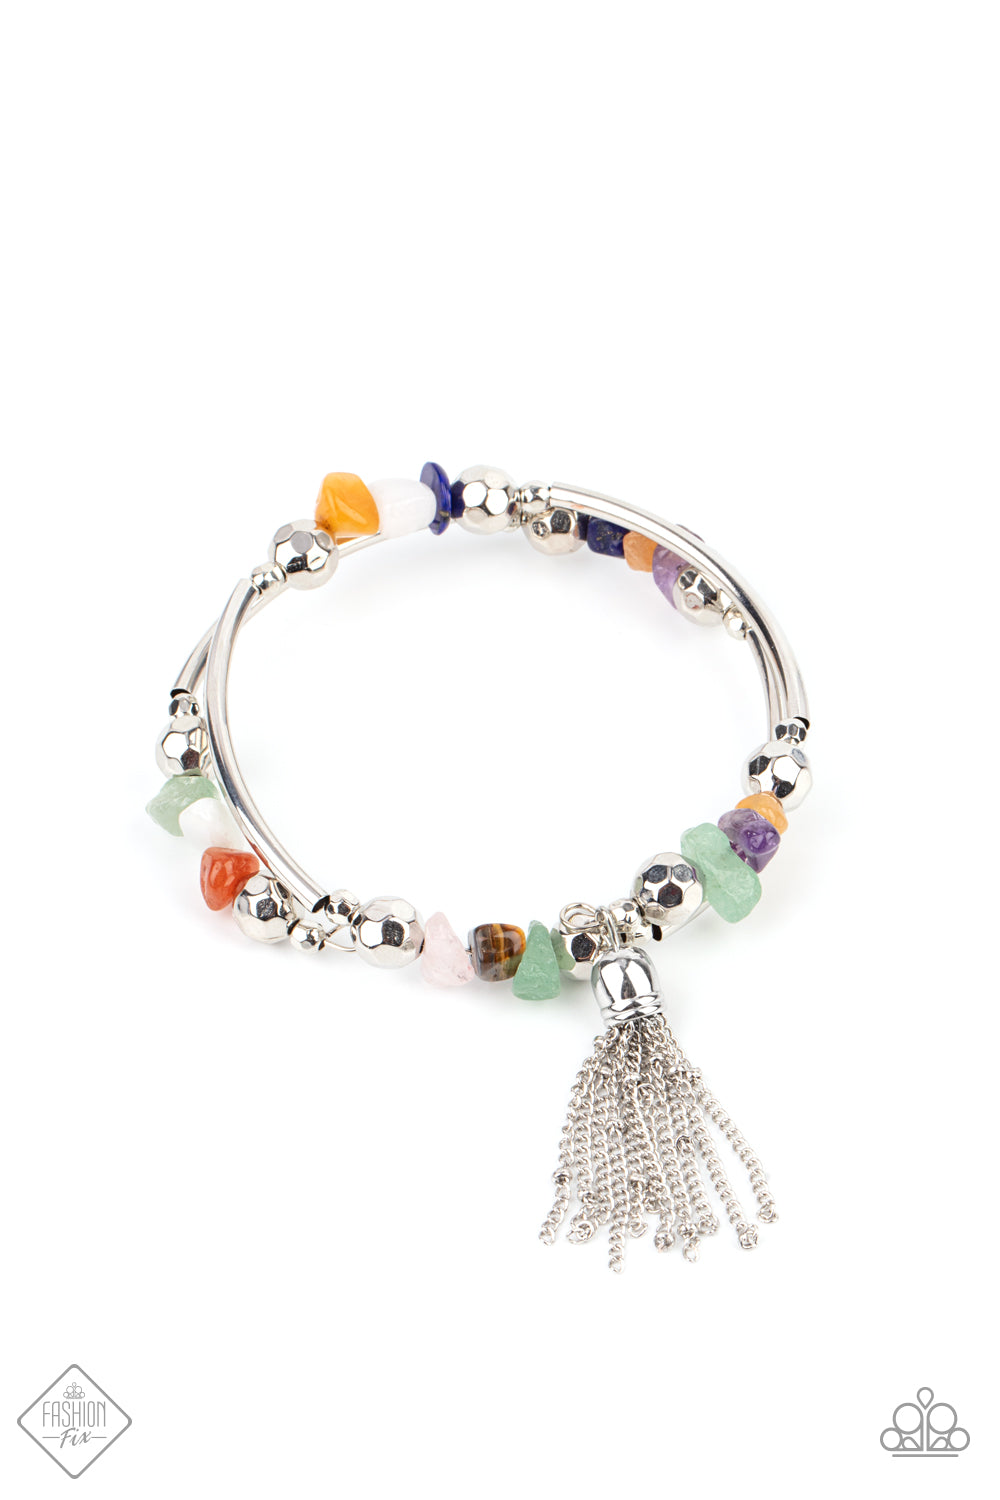 Handmade Unique Bracelets Mineral Beads On Stock Photo 1751467790 |  Shutterstock